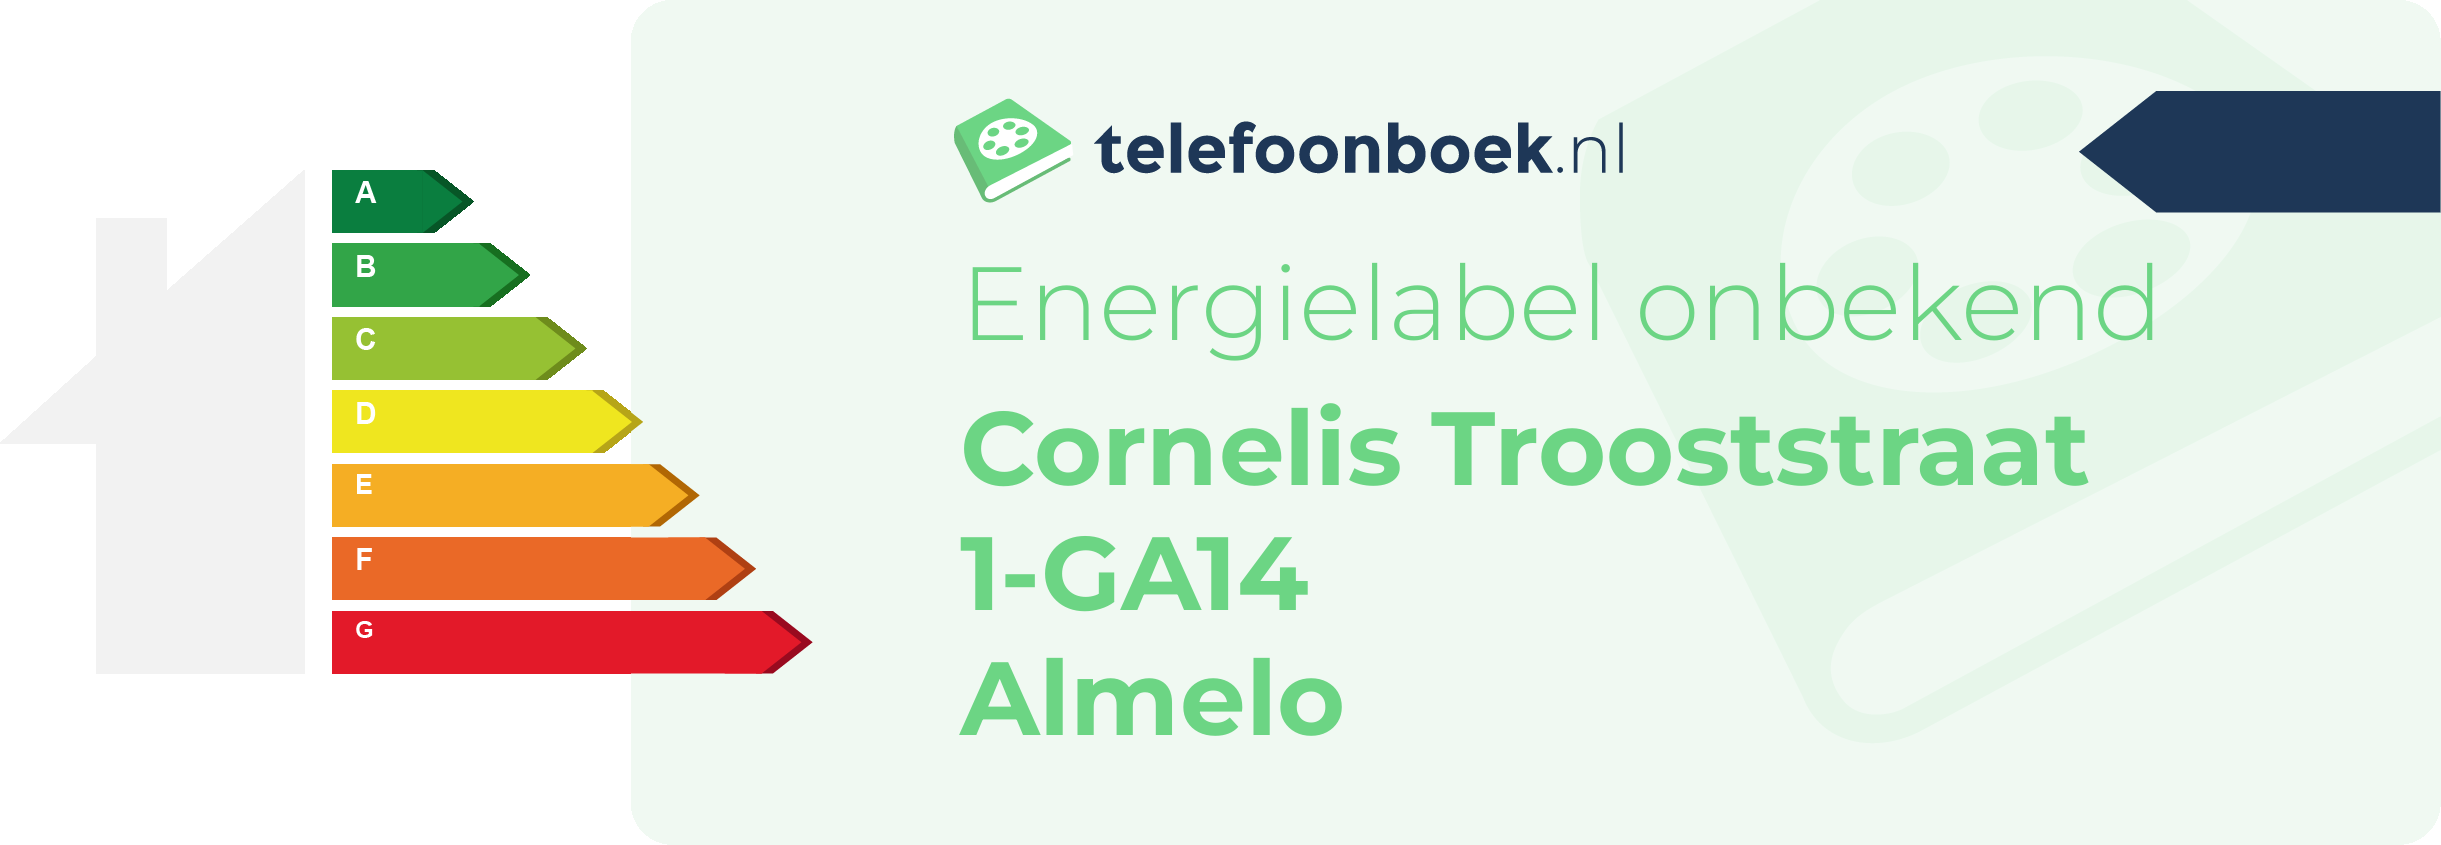 Energielabel Cornelis Trooststraat 1-GA14 Almelo